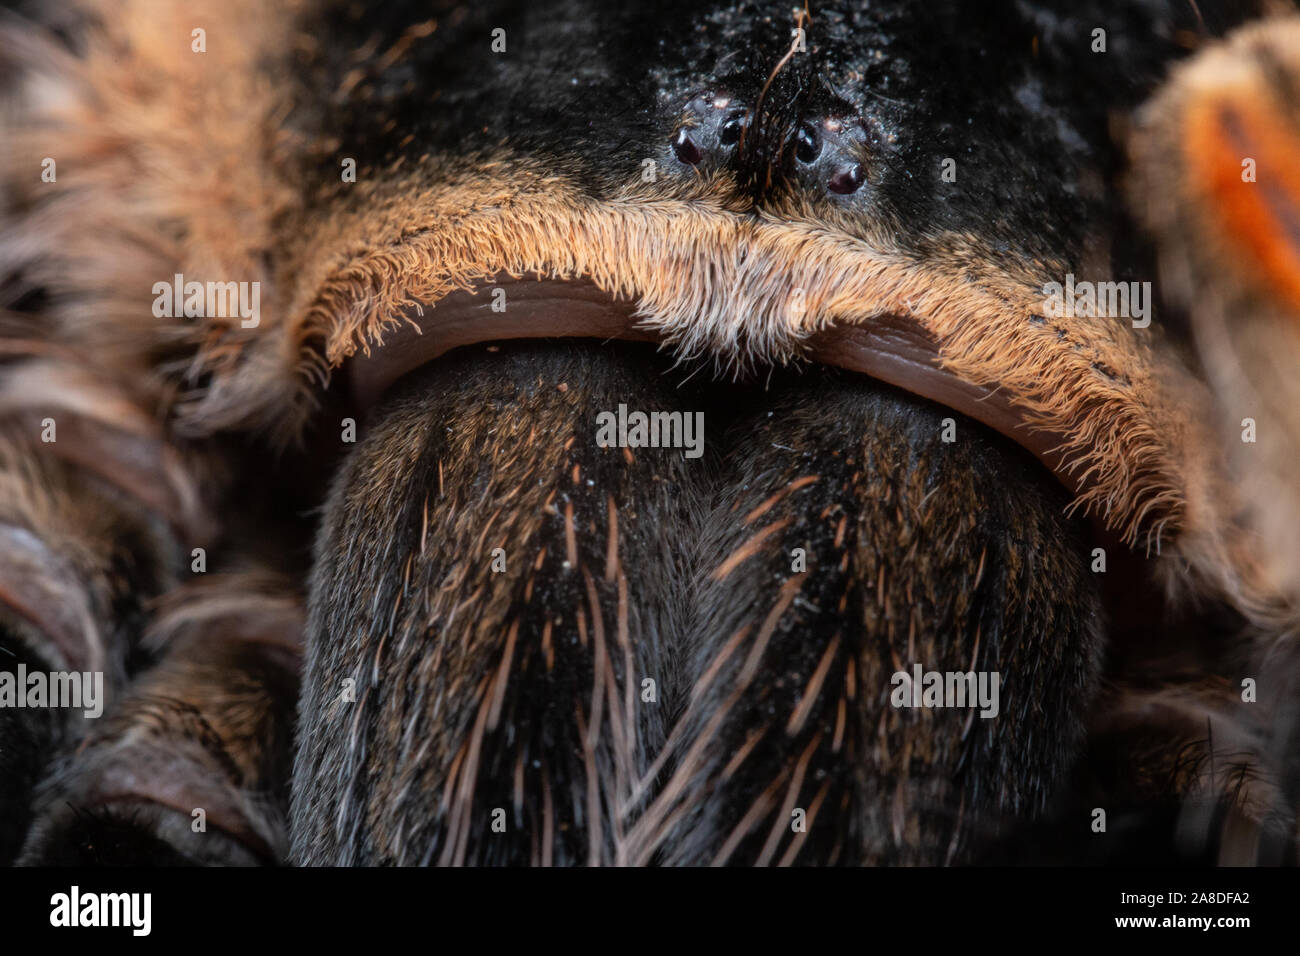 Mexican Red Knee Tarantula, Brachypelma hamorii, on a piece of cork bark Stock Photo